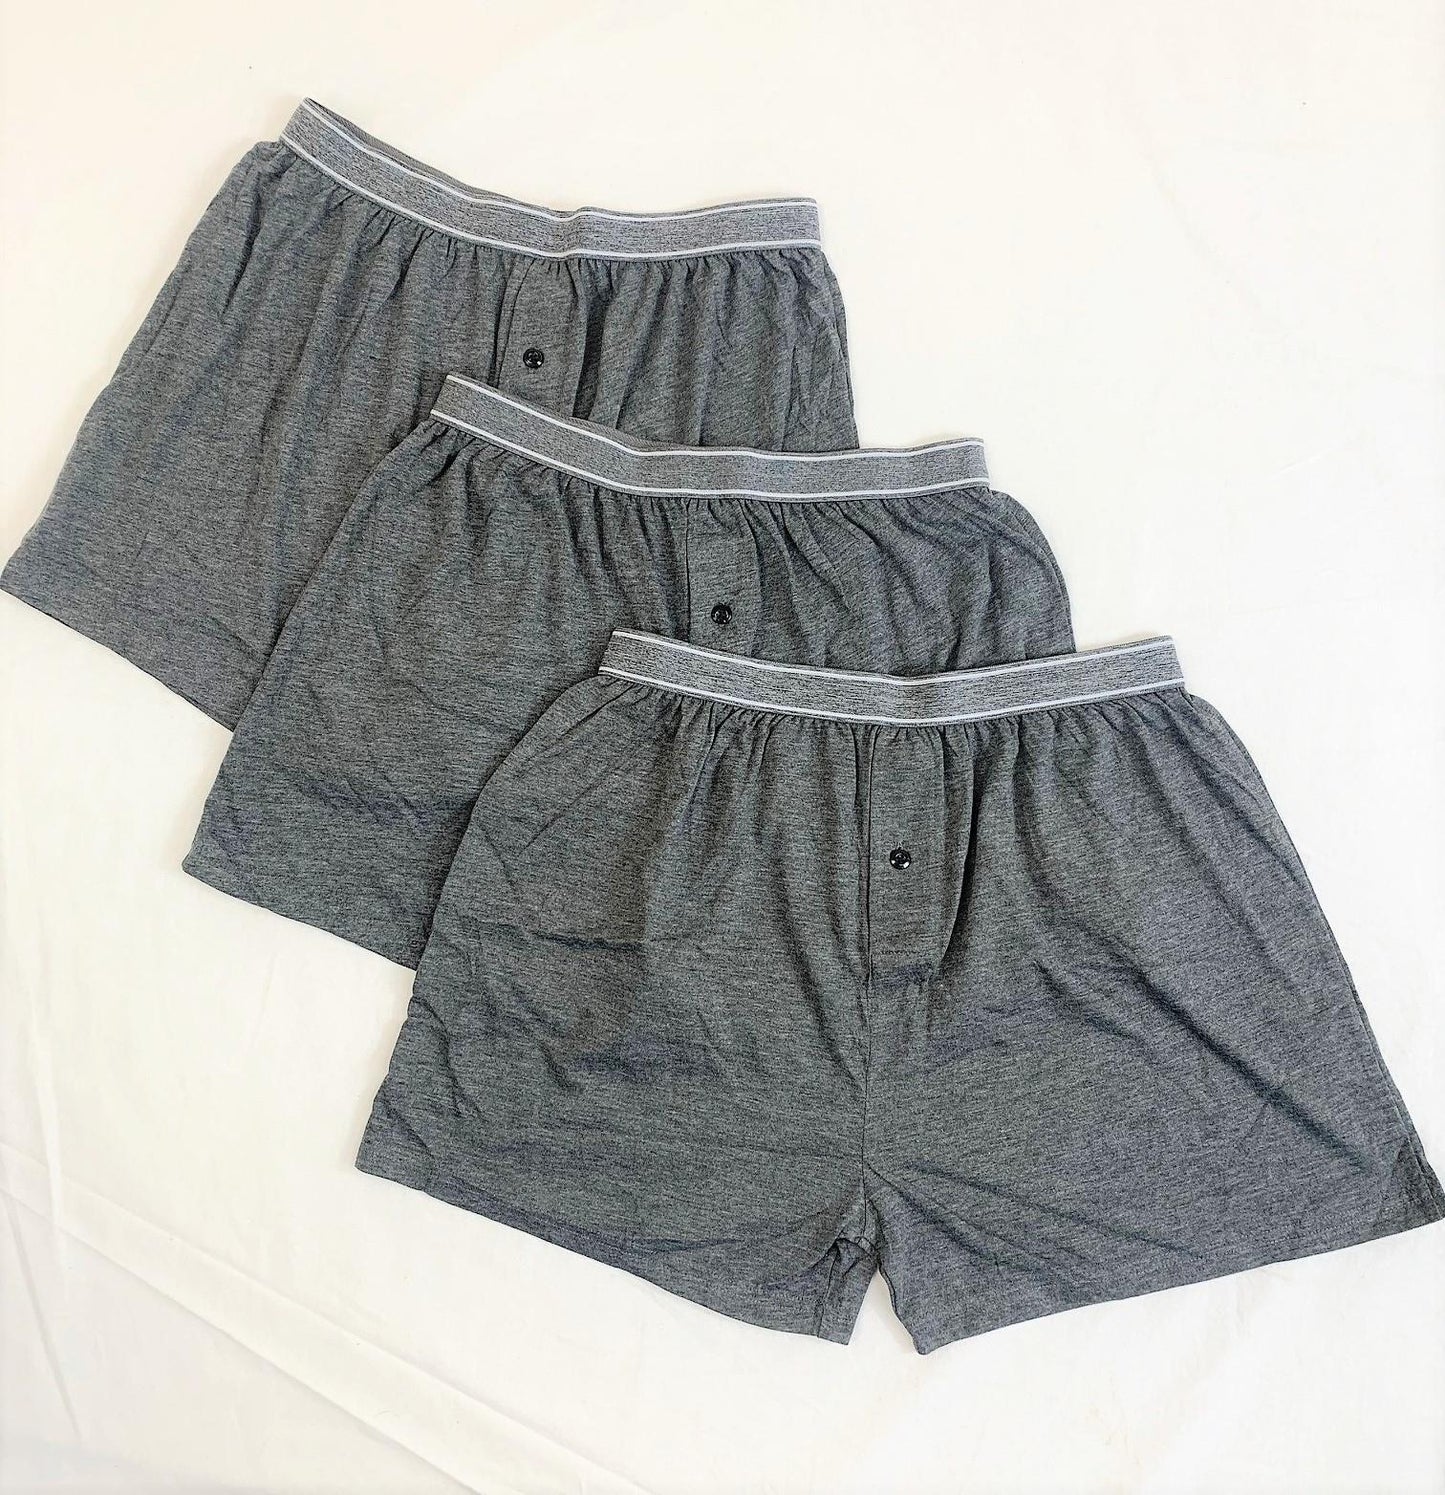 M*S Men's 3-Pack Cool Comfort Jersey Boxers Underpants Cotton Multipack New